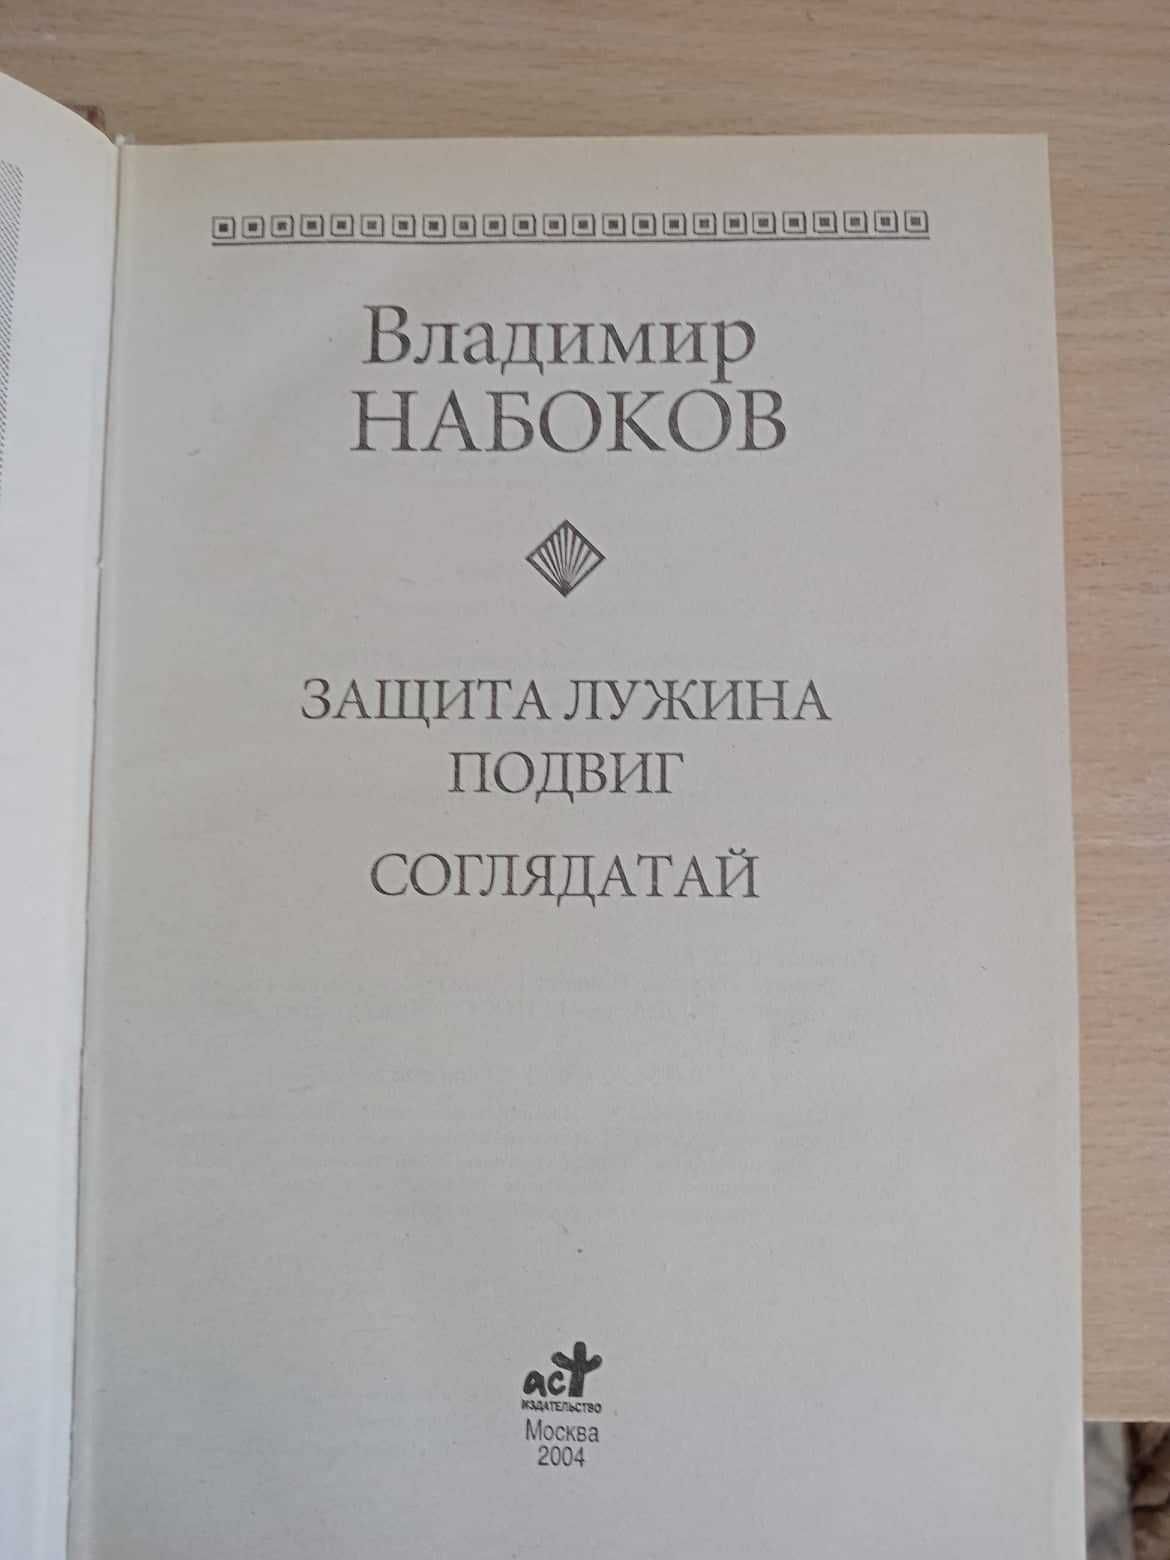 книга "Владимир Набоков"